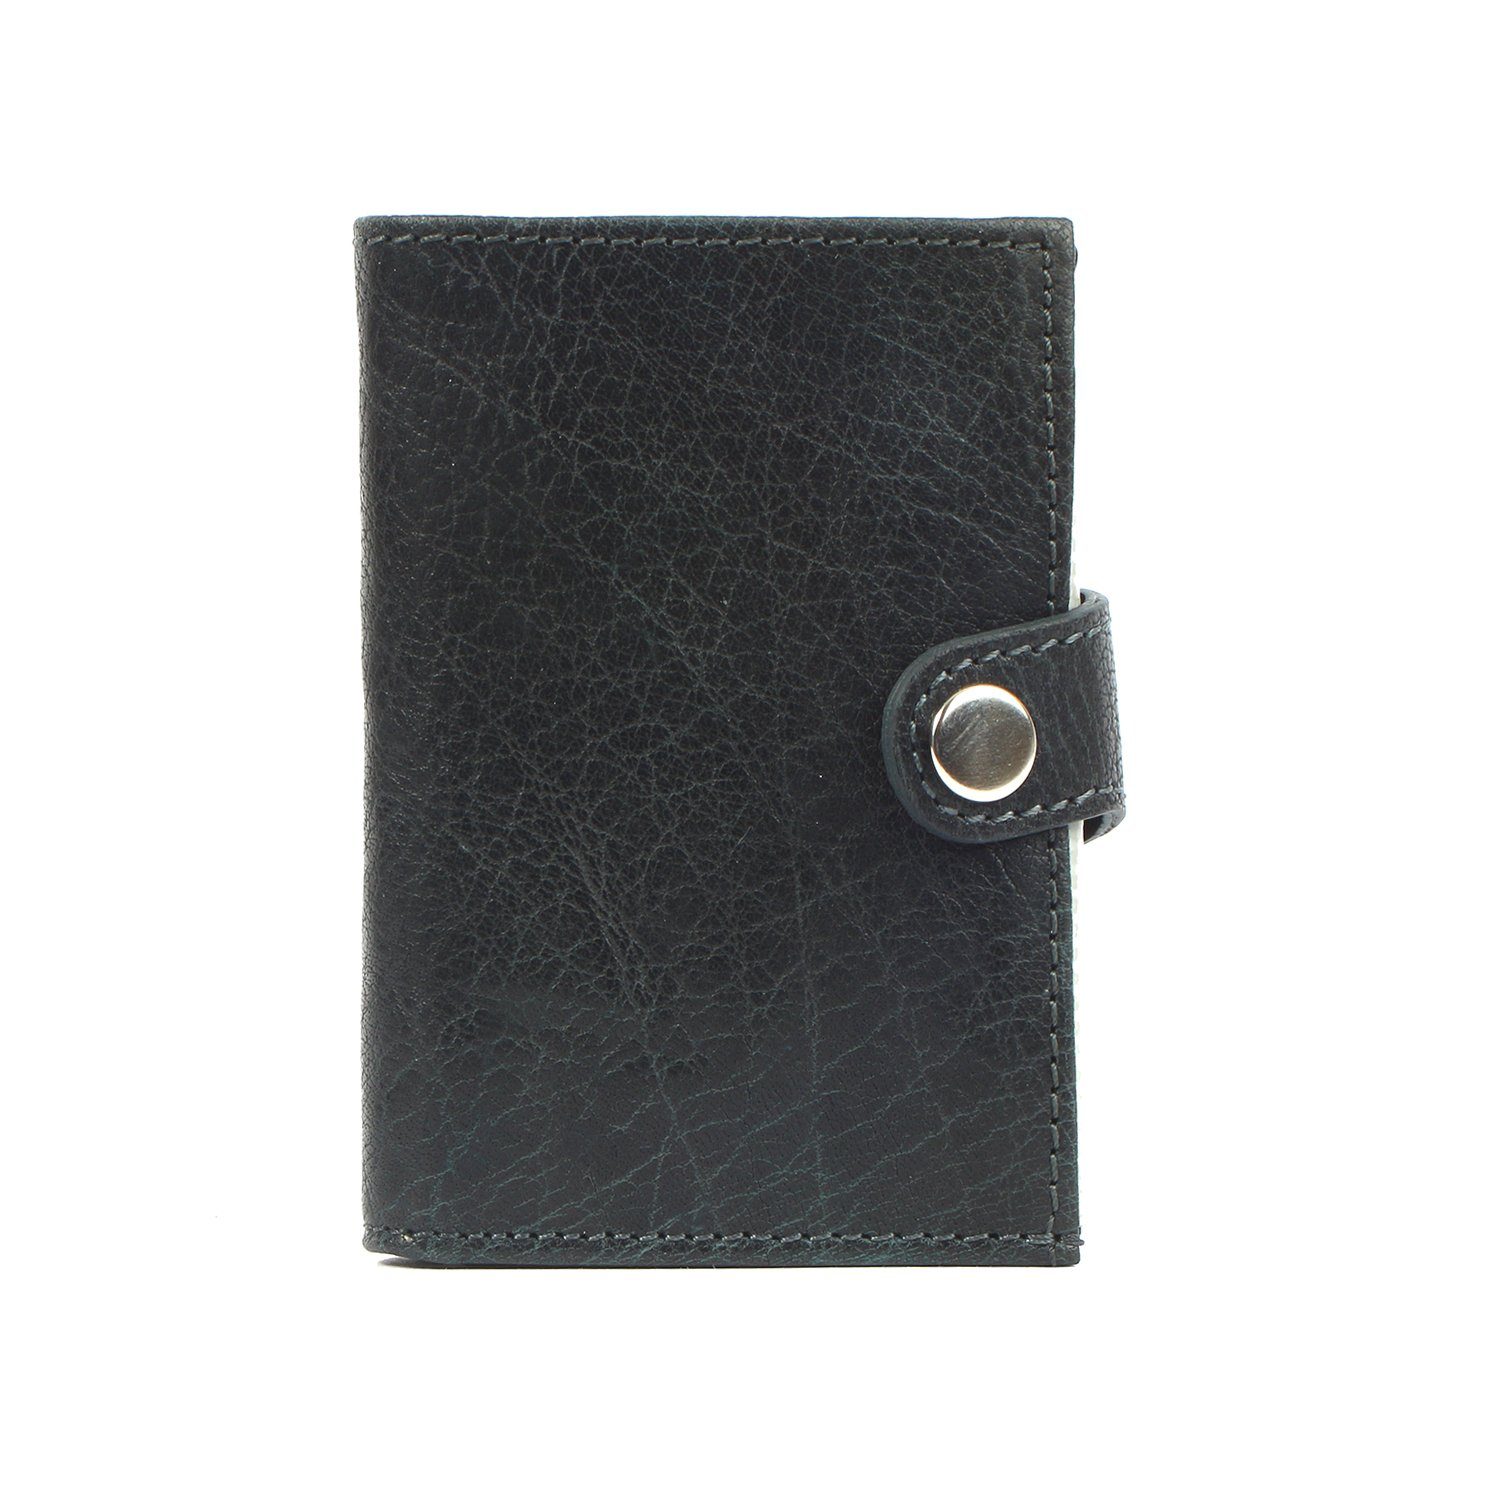 Margelisch Mini Geldbörse noonyu single Leder Kreditkartenbörse leather, steelblue Upcycling aus